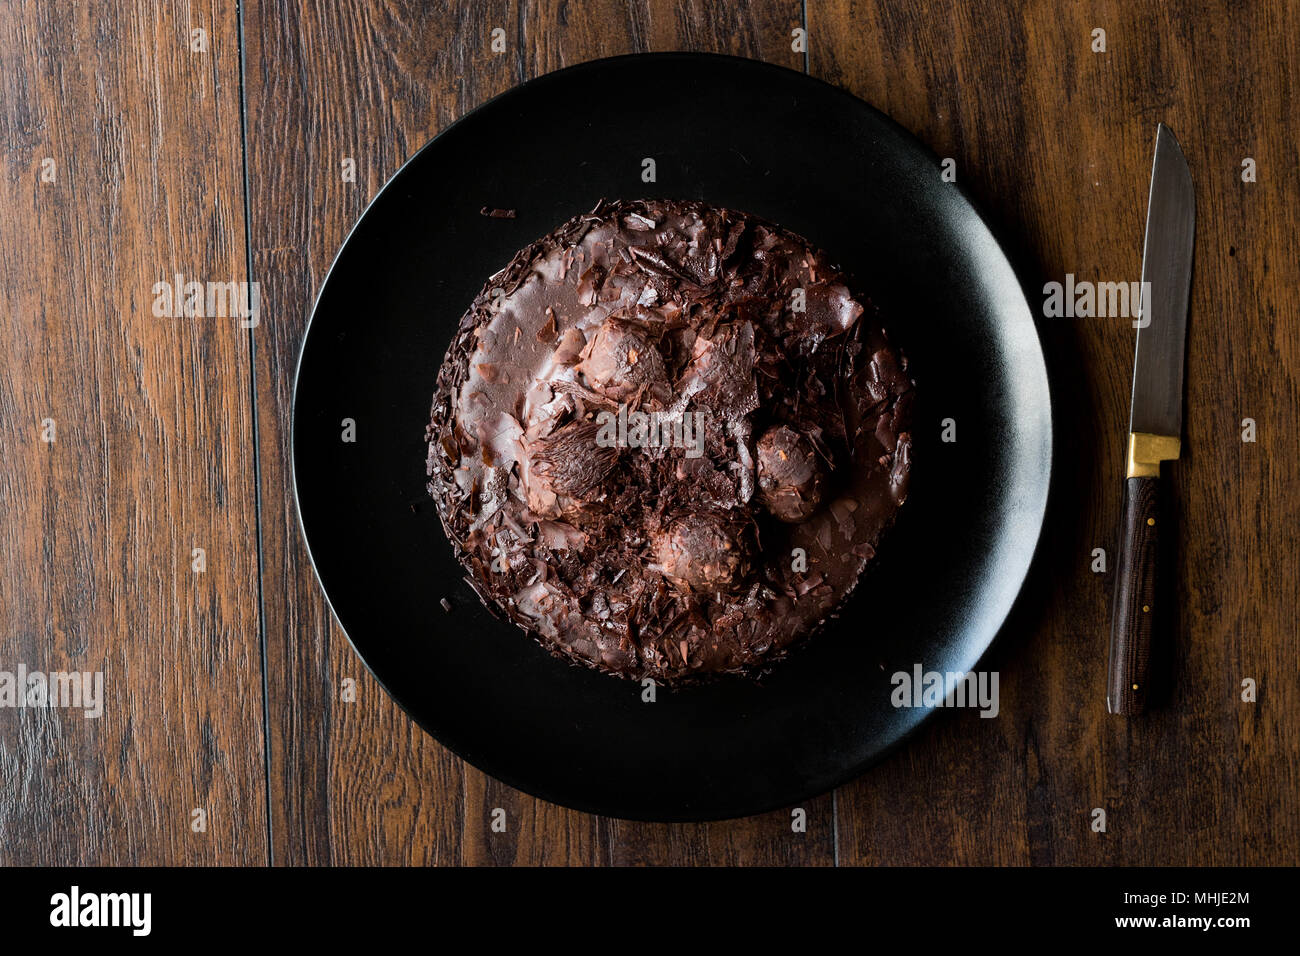 Chocolate Profiterole Cake on Black Plate. Dessert Concept. Stock Photo